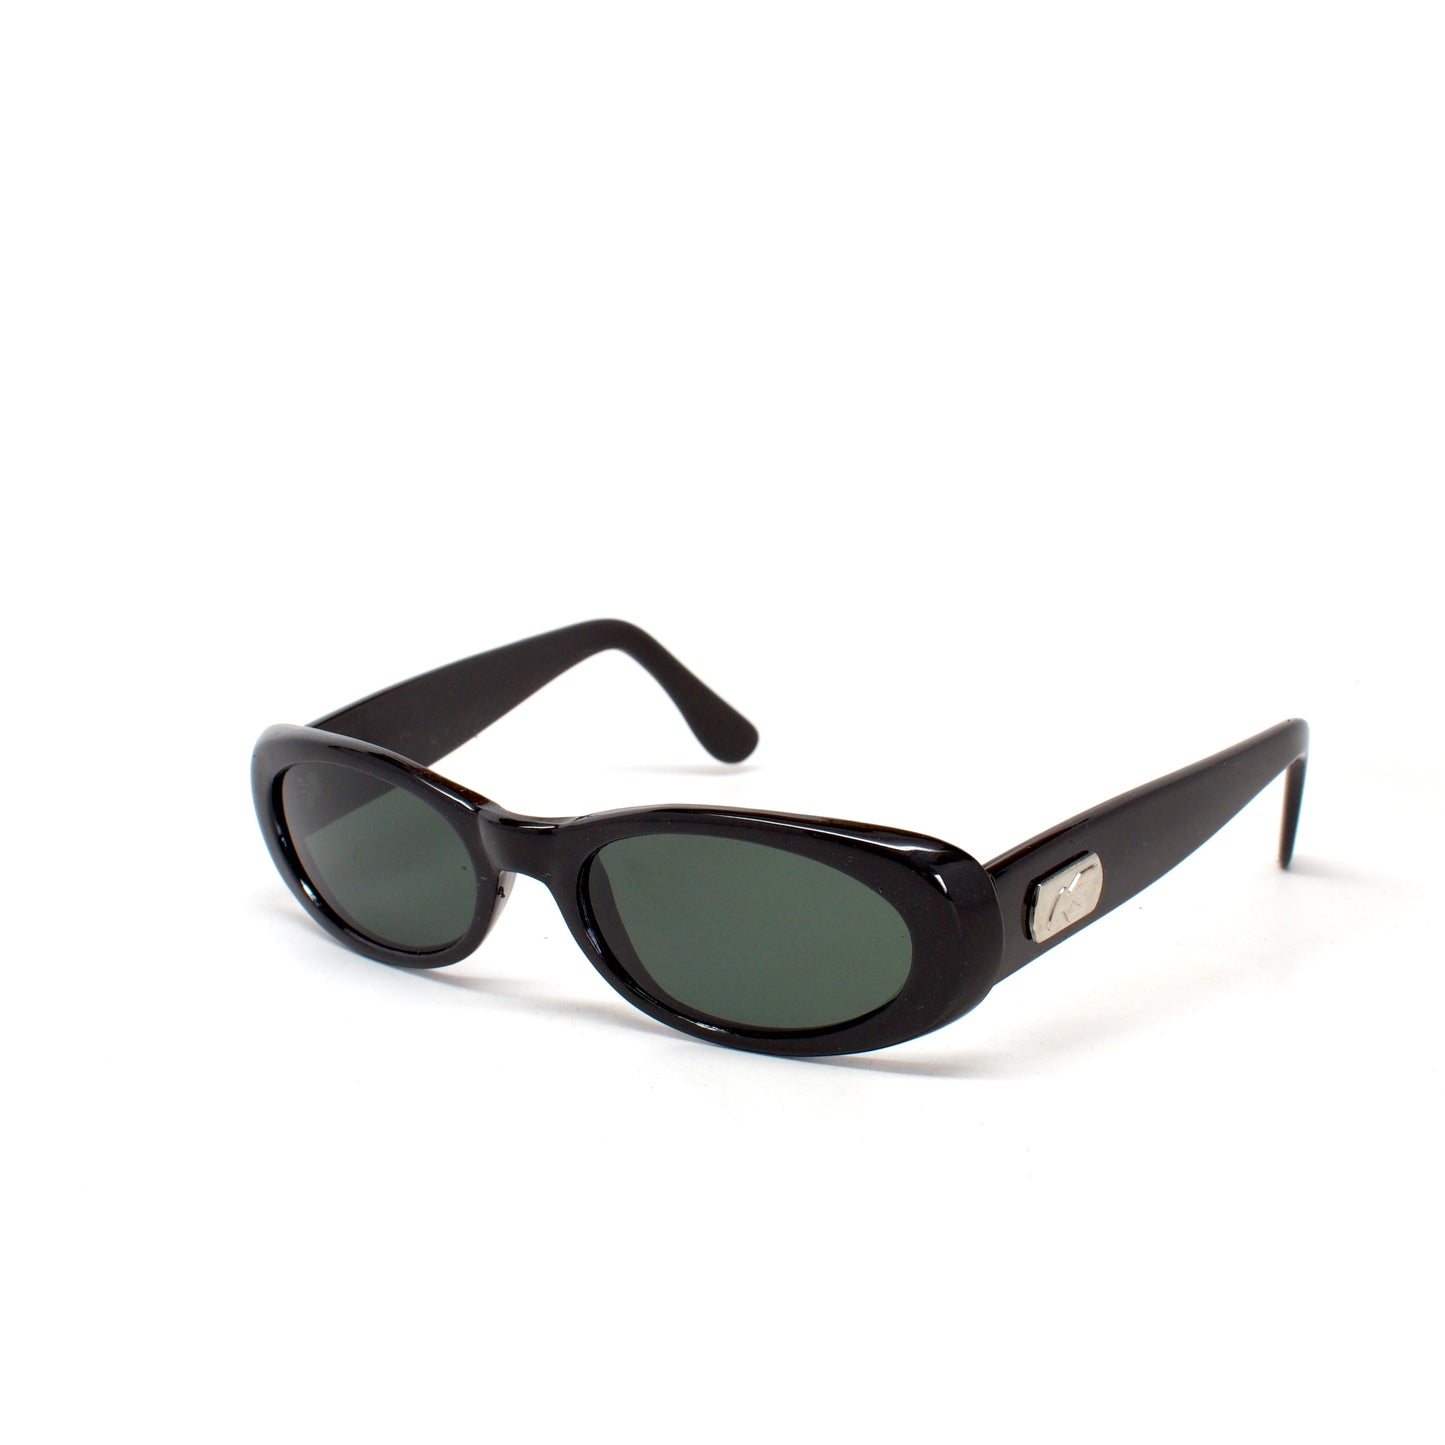 Vintage Standard Size 90s Mod Original Laine Oval Sunglasses - Black